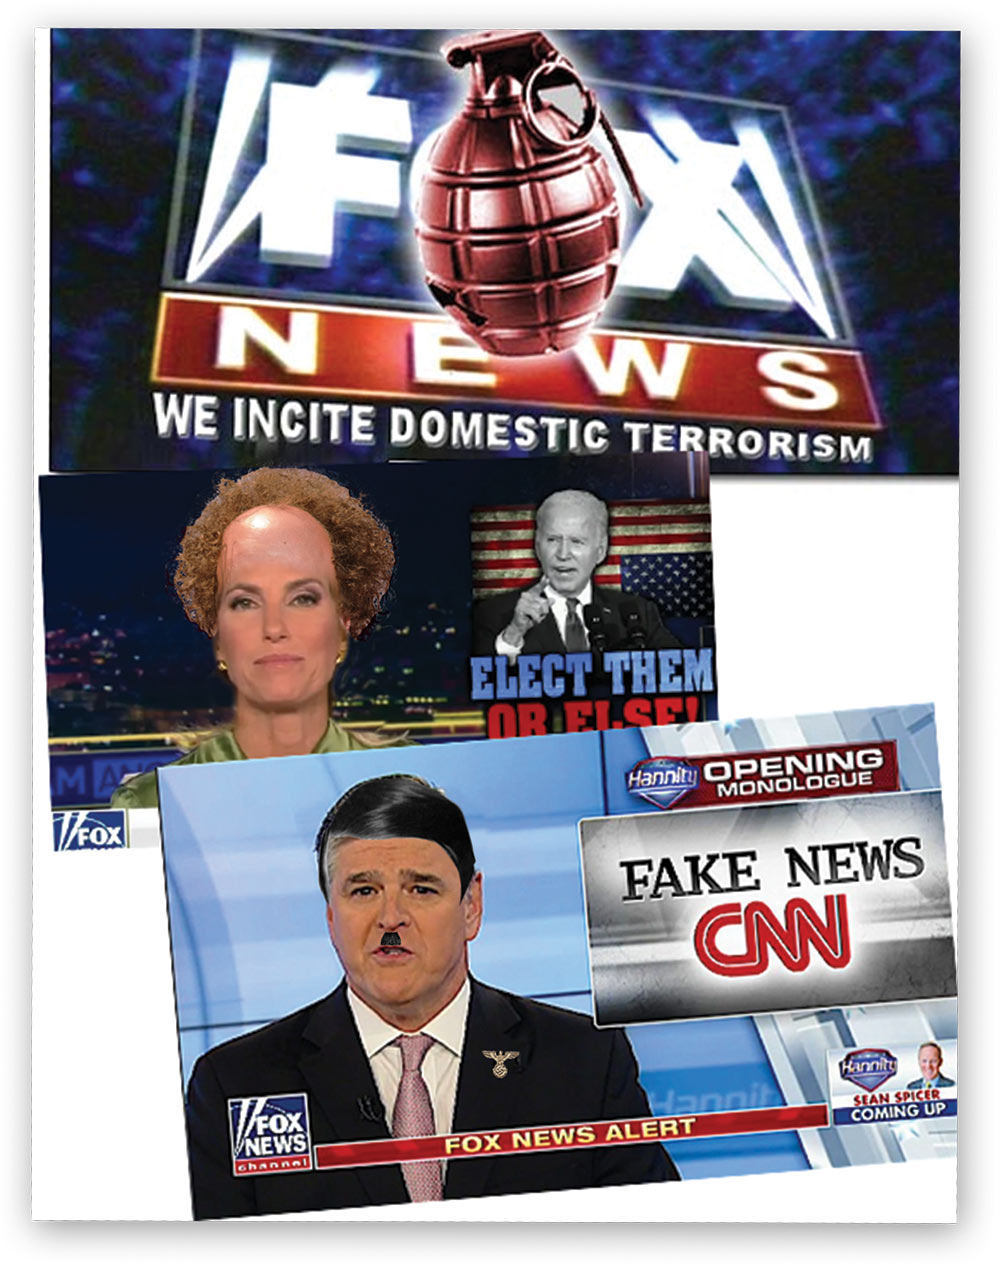 Unmasking Bias and Hate: Analyzing Fox News' Biased Reporting